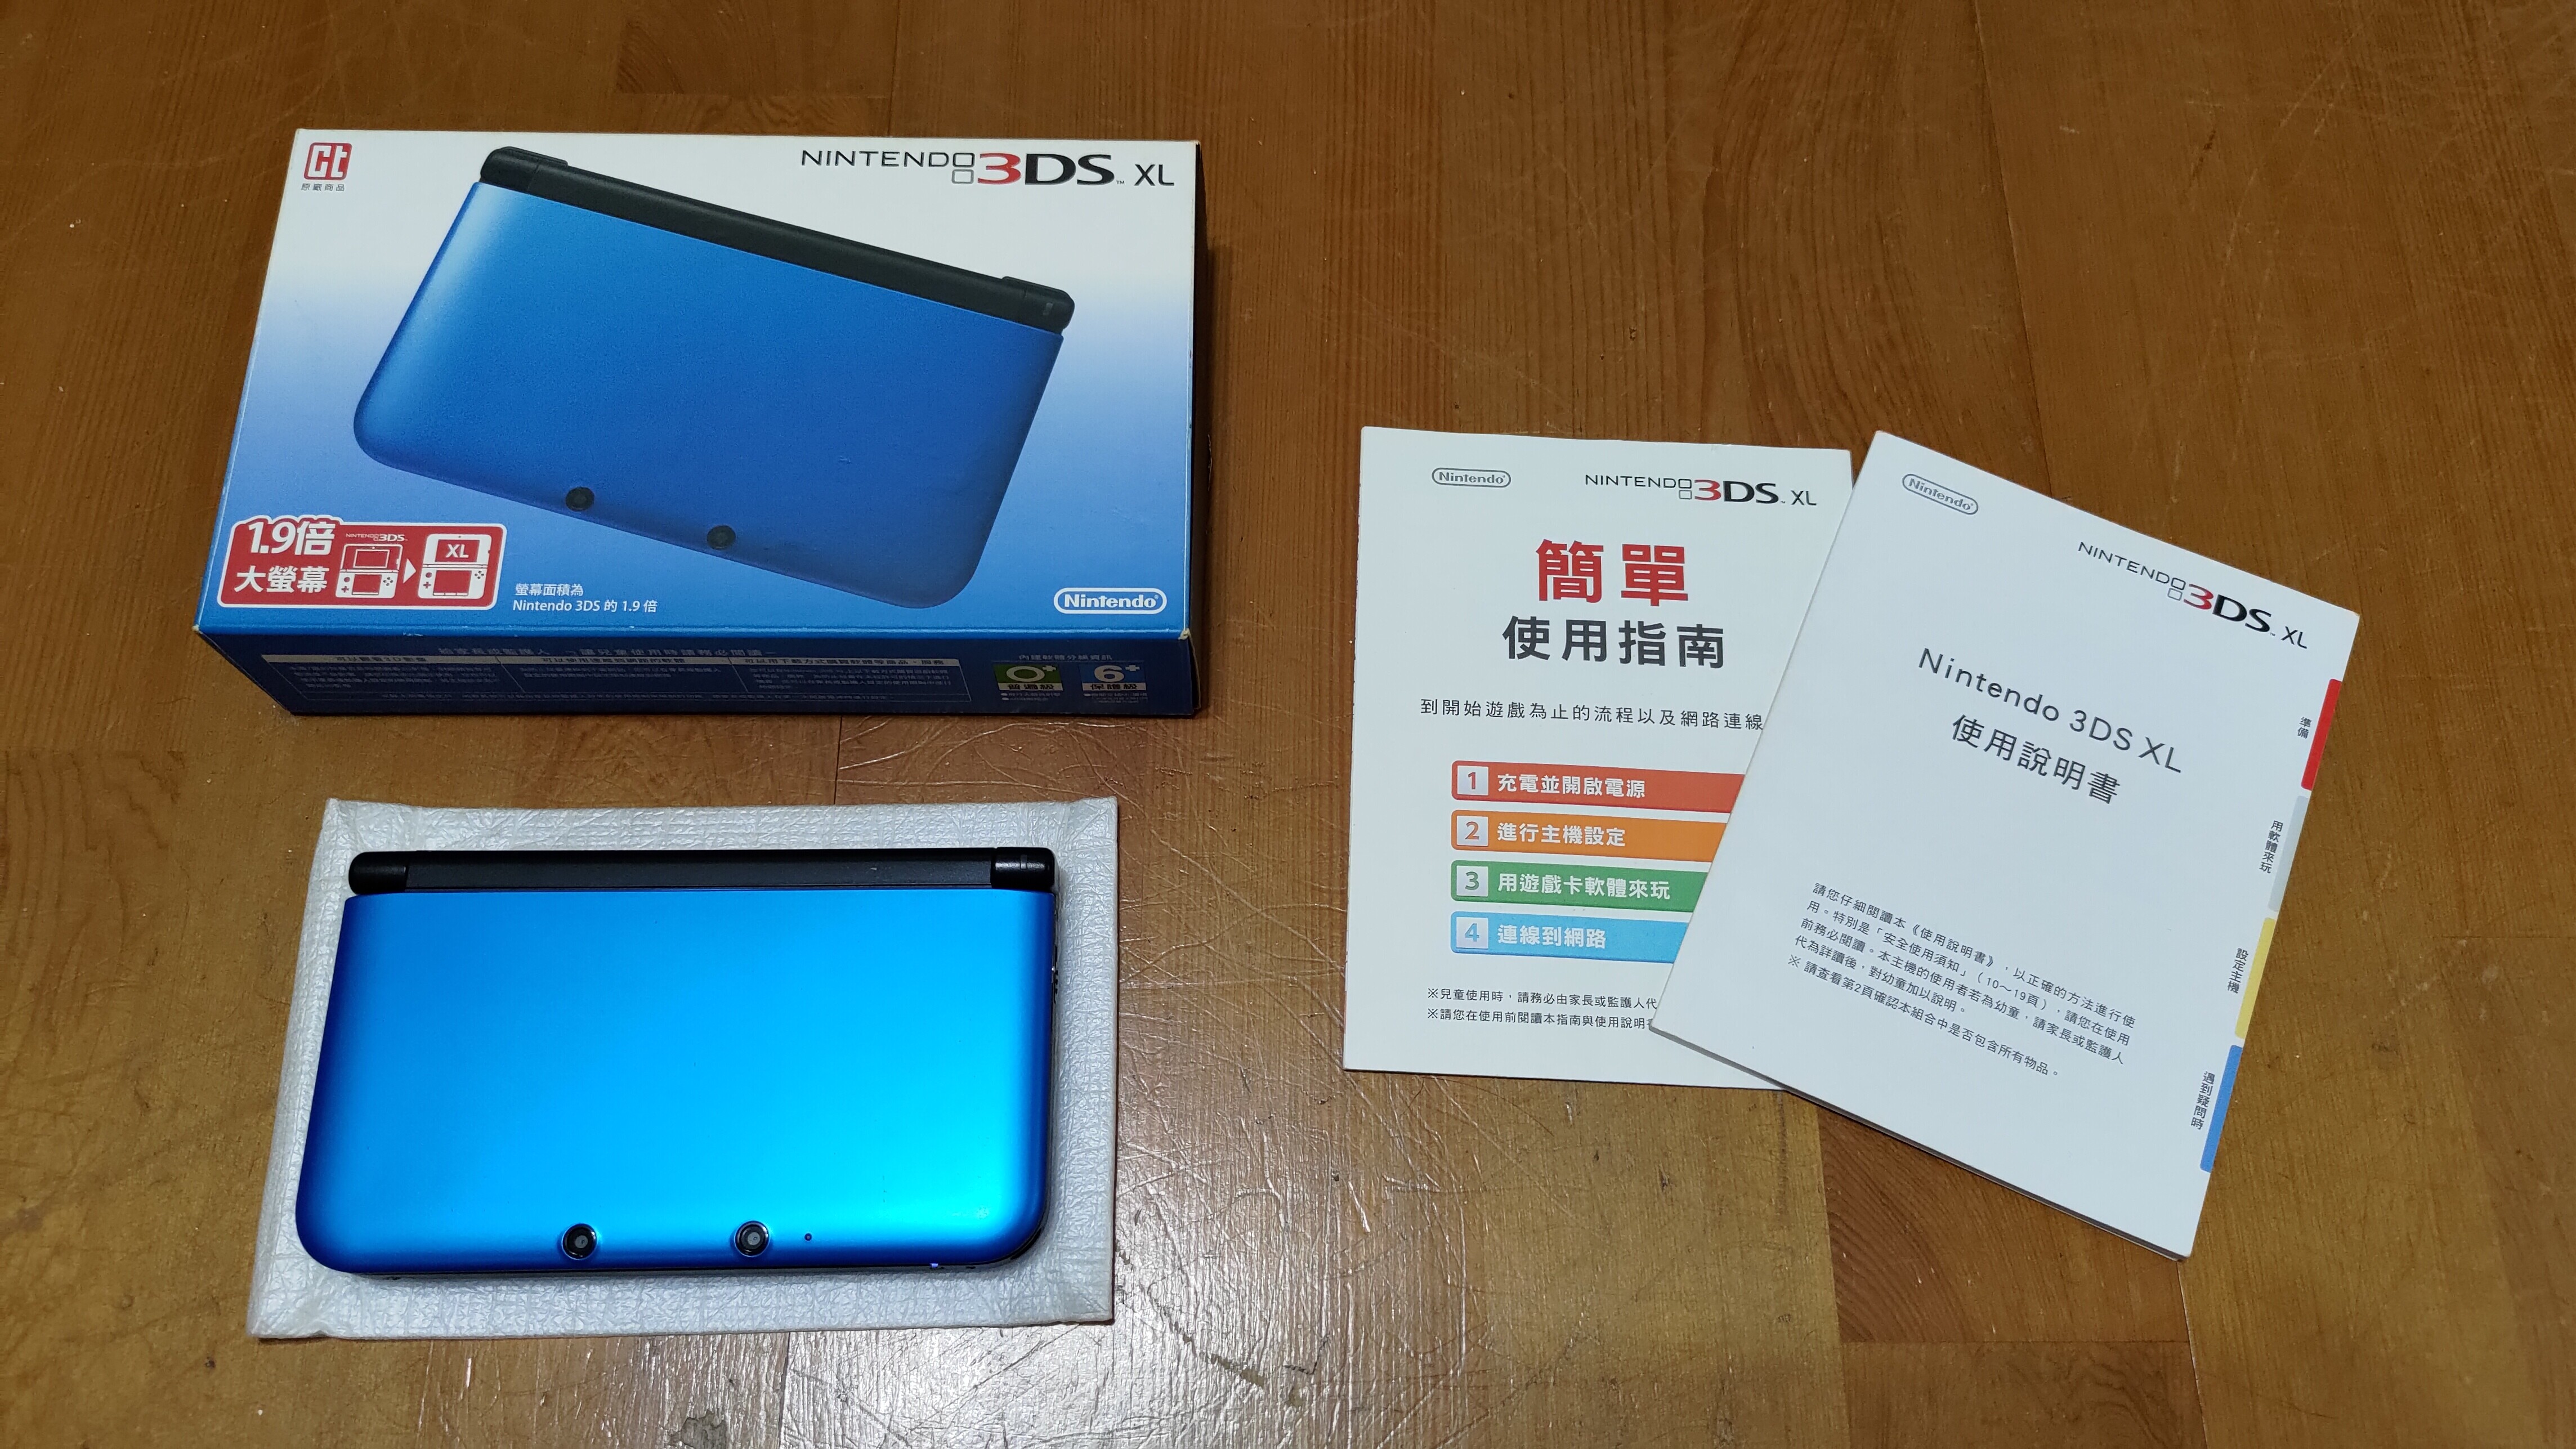  Nintendo 3DS XL Metallic Blue Console [TW]